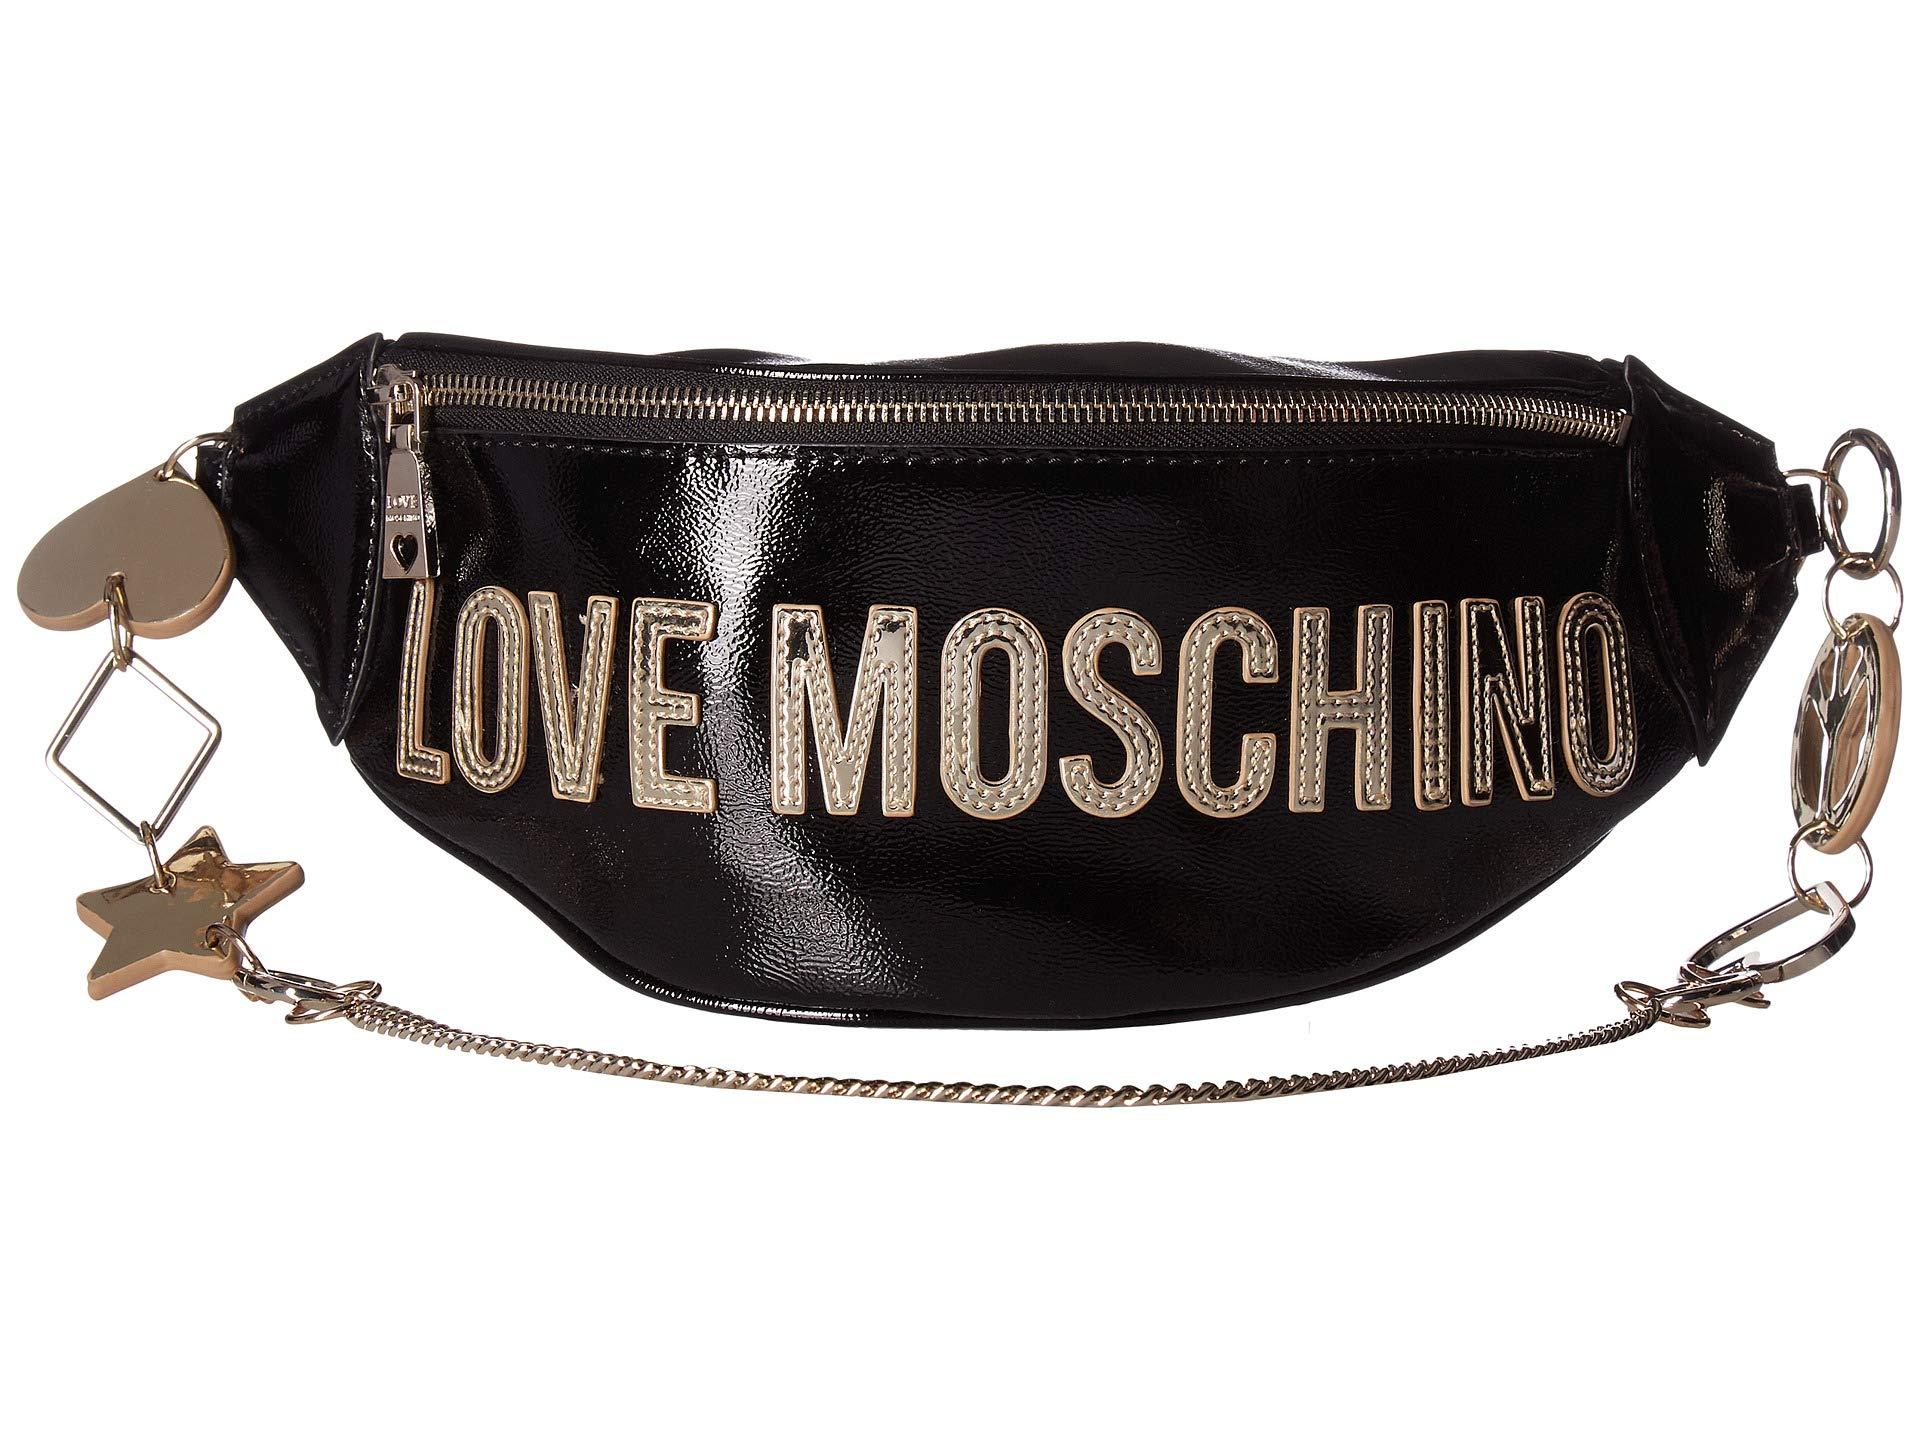 belt bag love moschino